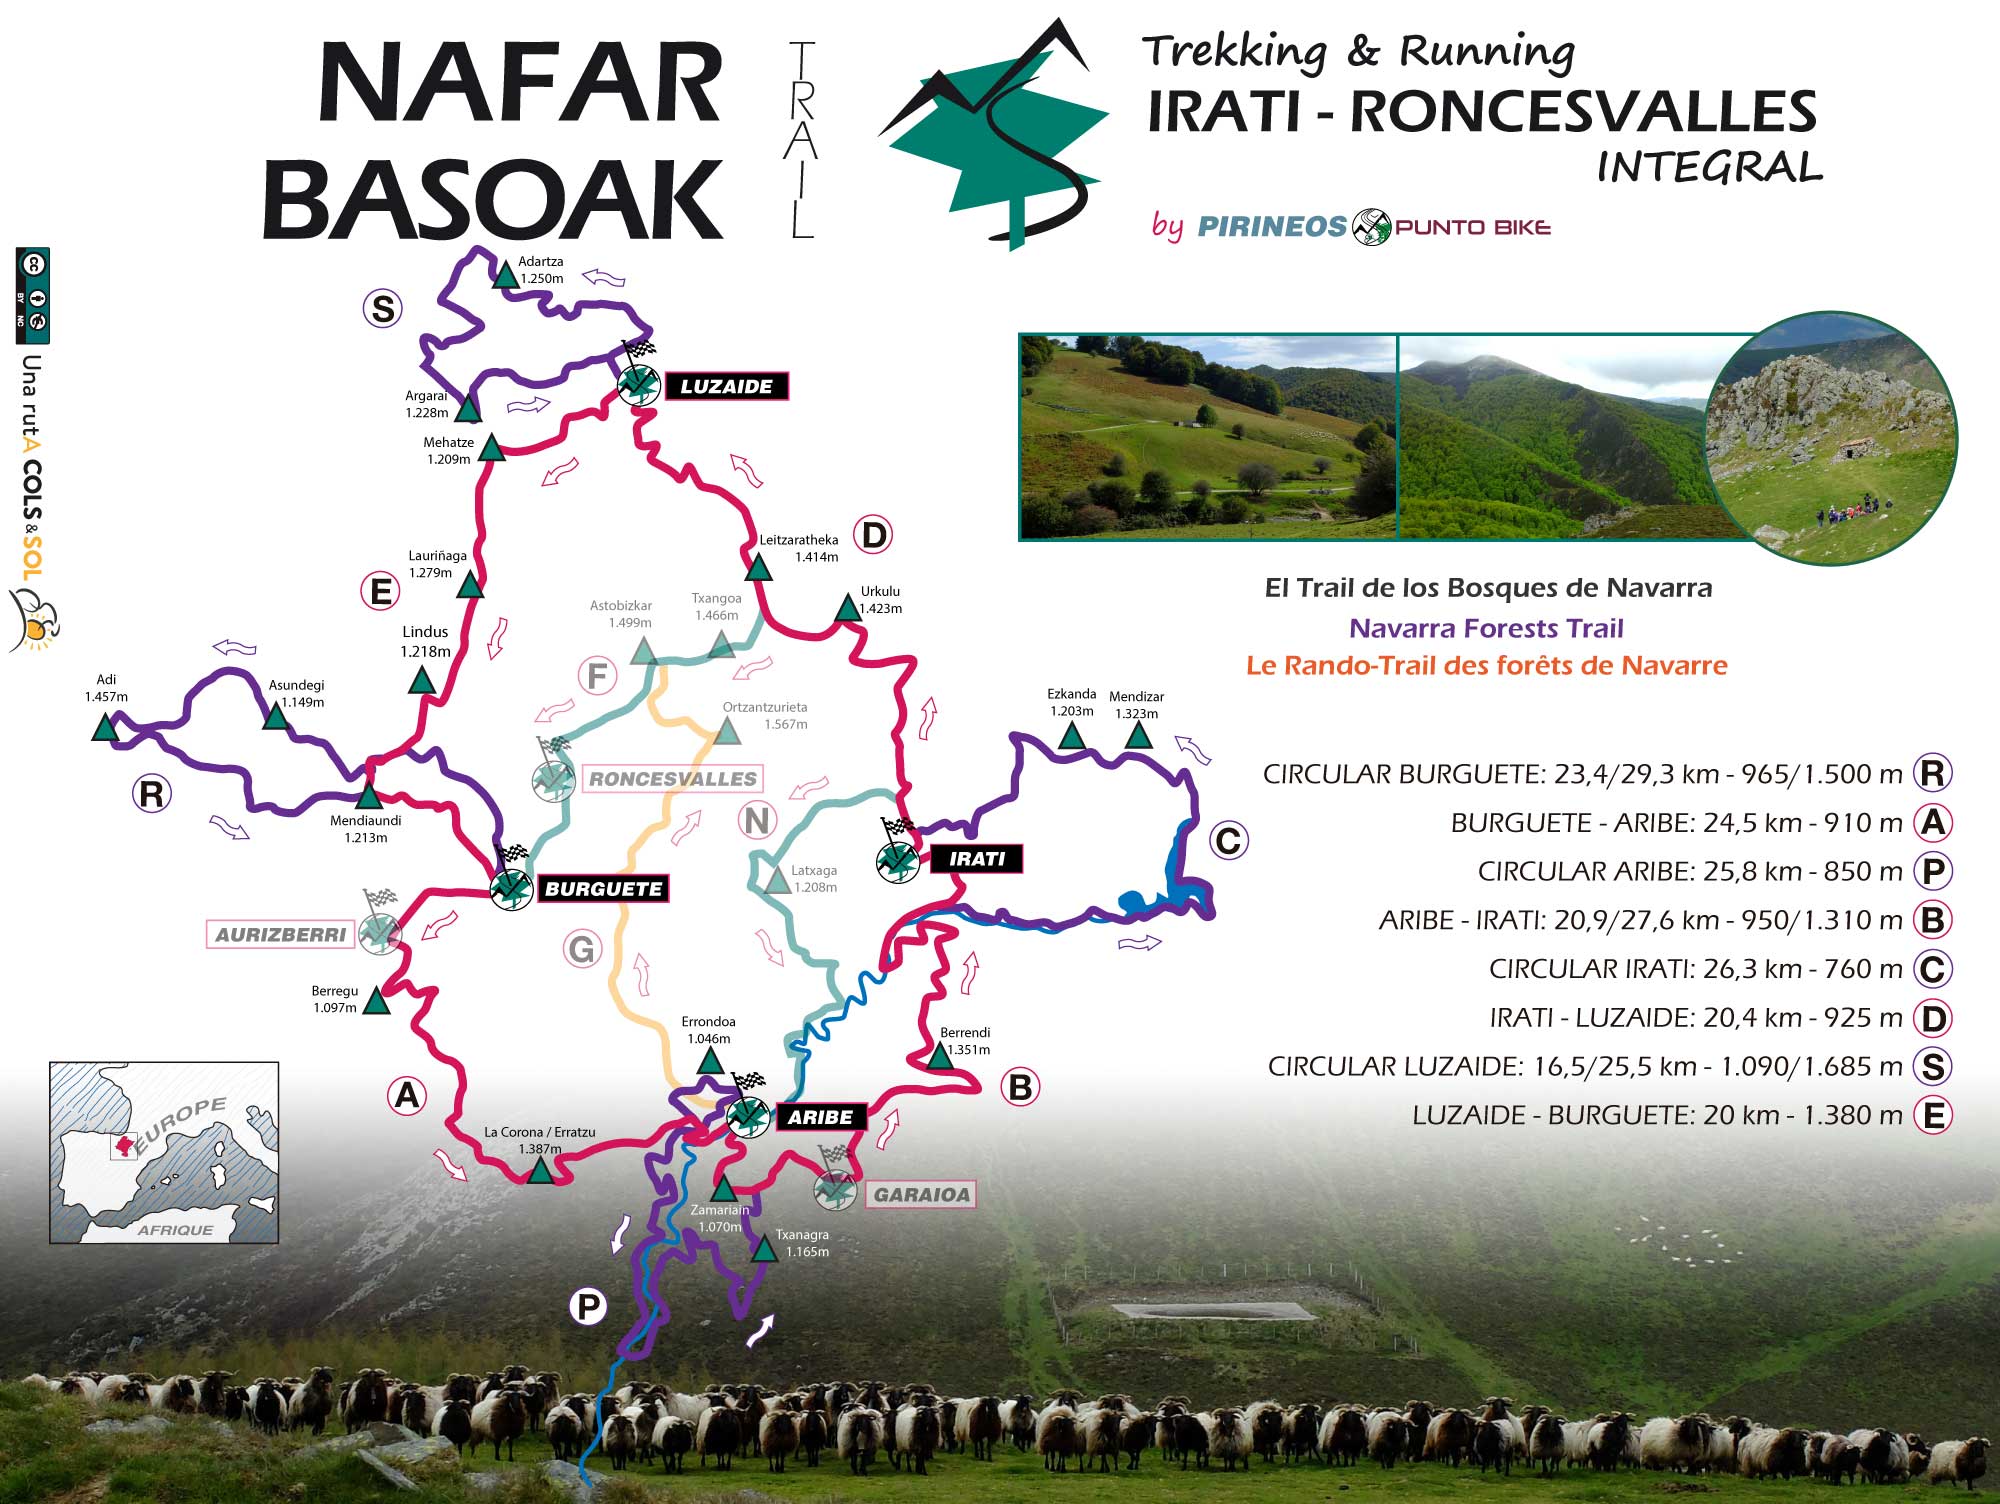 Mapa de ruta Nafar Basoak Trail Integral desktop